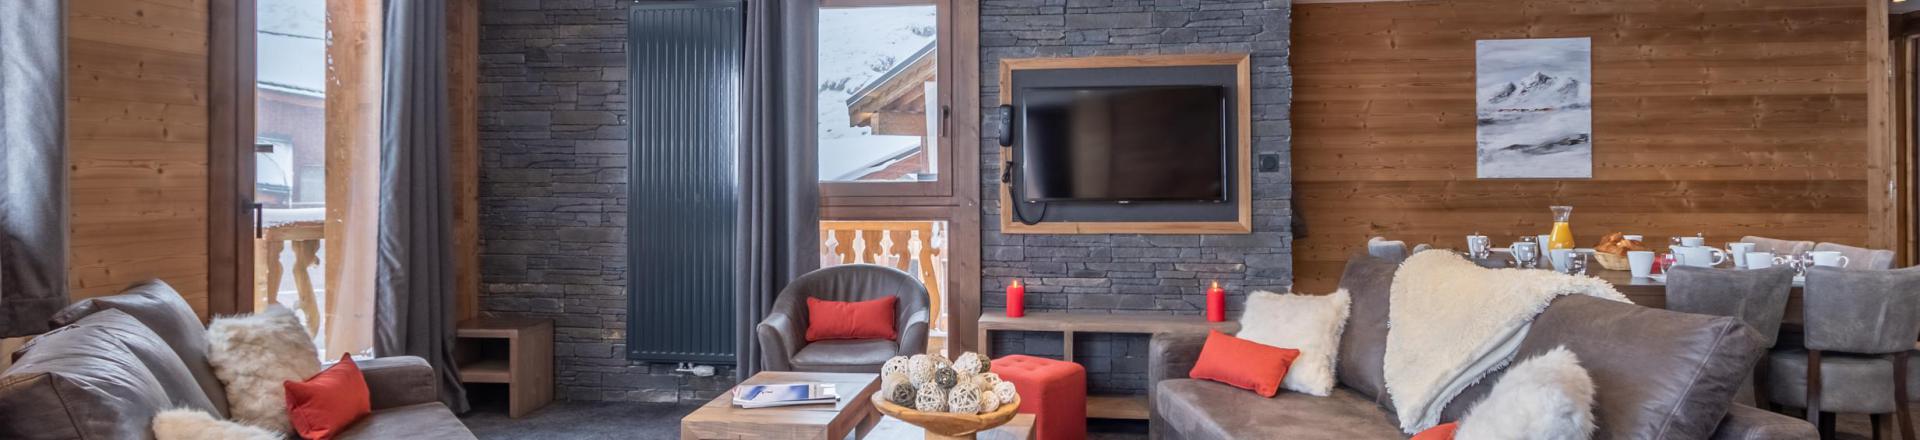 Rent in ski resort 6 room duplex apartment 10 people - Chalet Altitude - Val Thorens - Settee